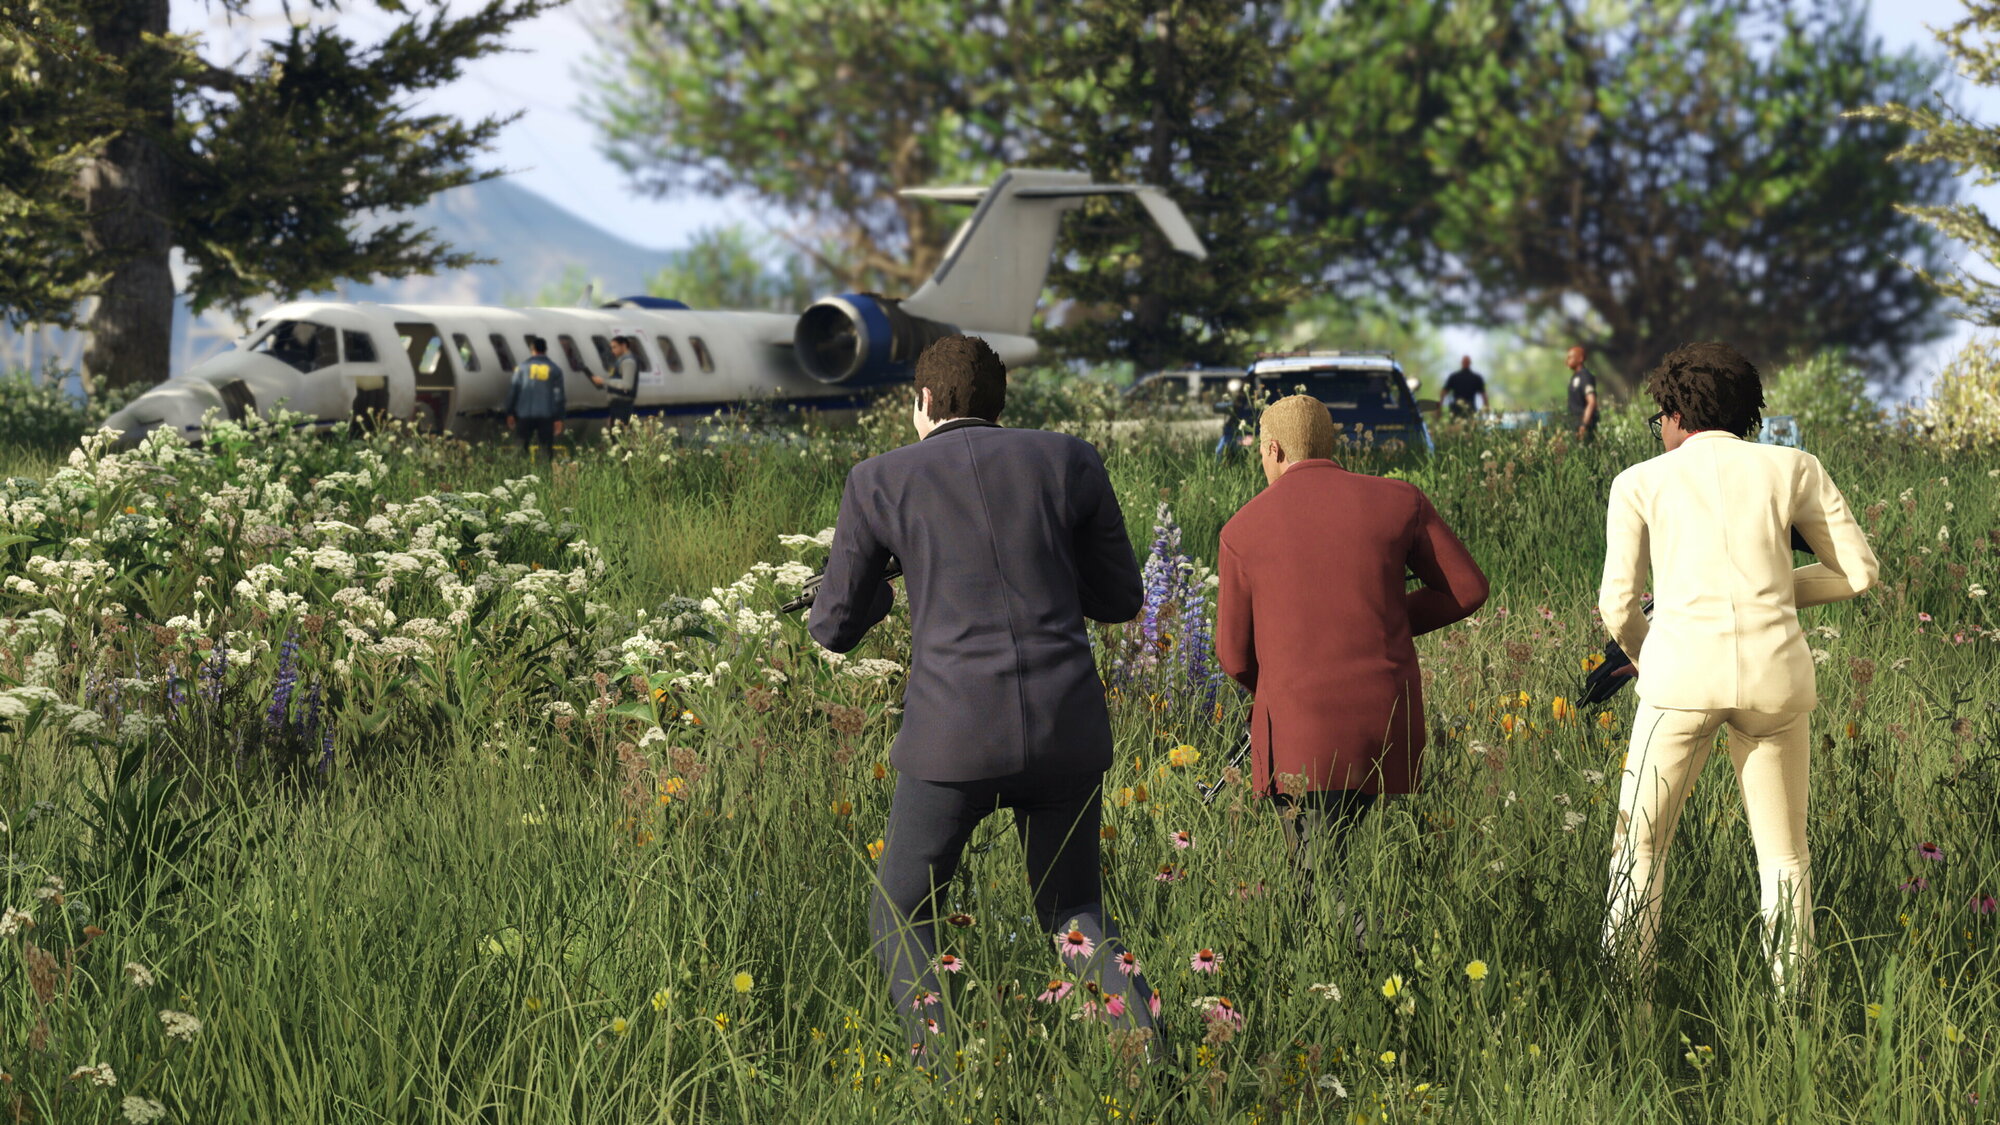 Grand Theft Auto V GTA 5 Premium Edition | PC | Rockstar Games Social Club | РФ